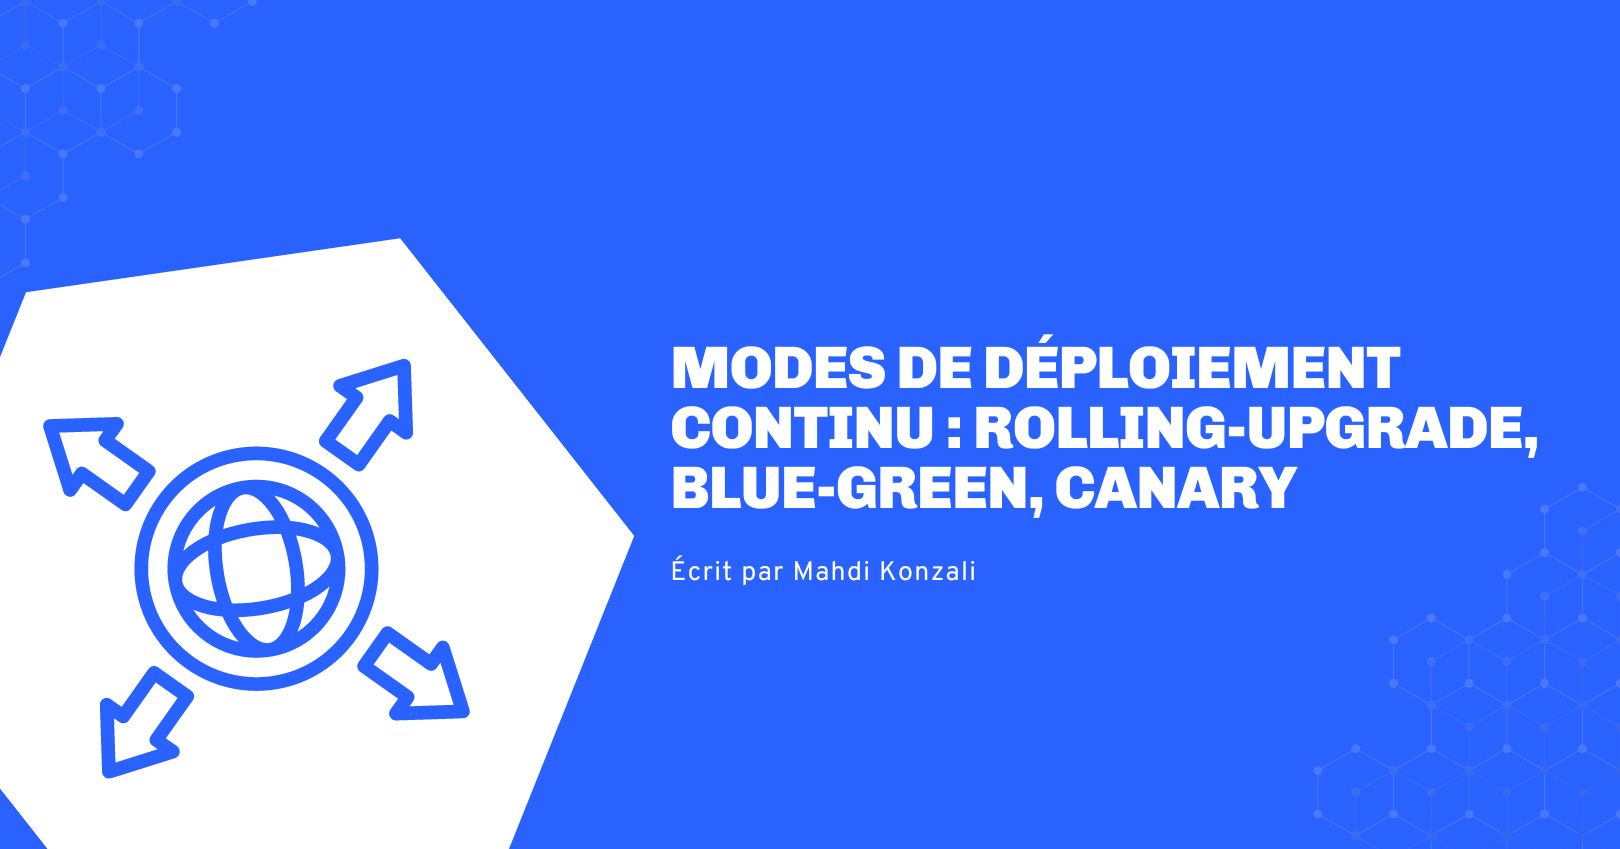 Modes de déploiement continu : rolling-upgrade, blue-green, canary - image